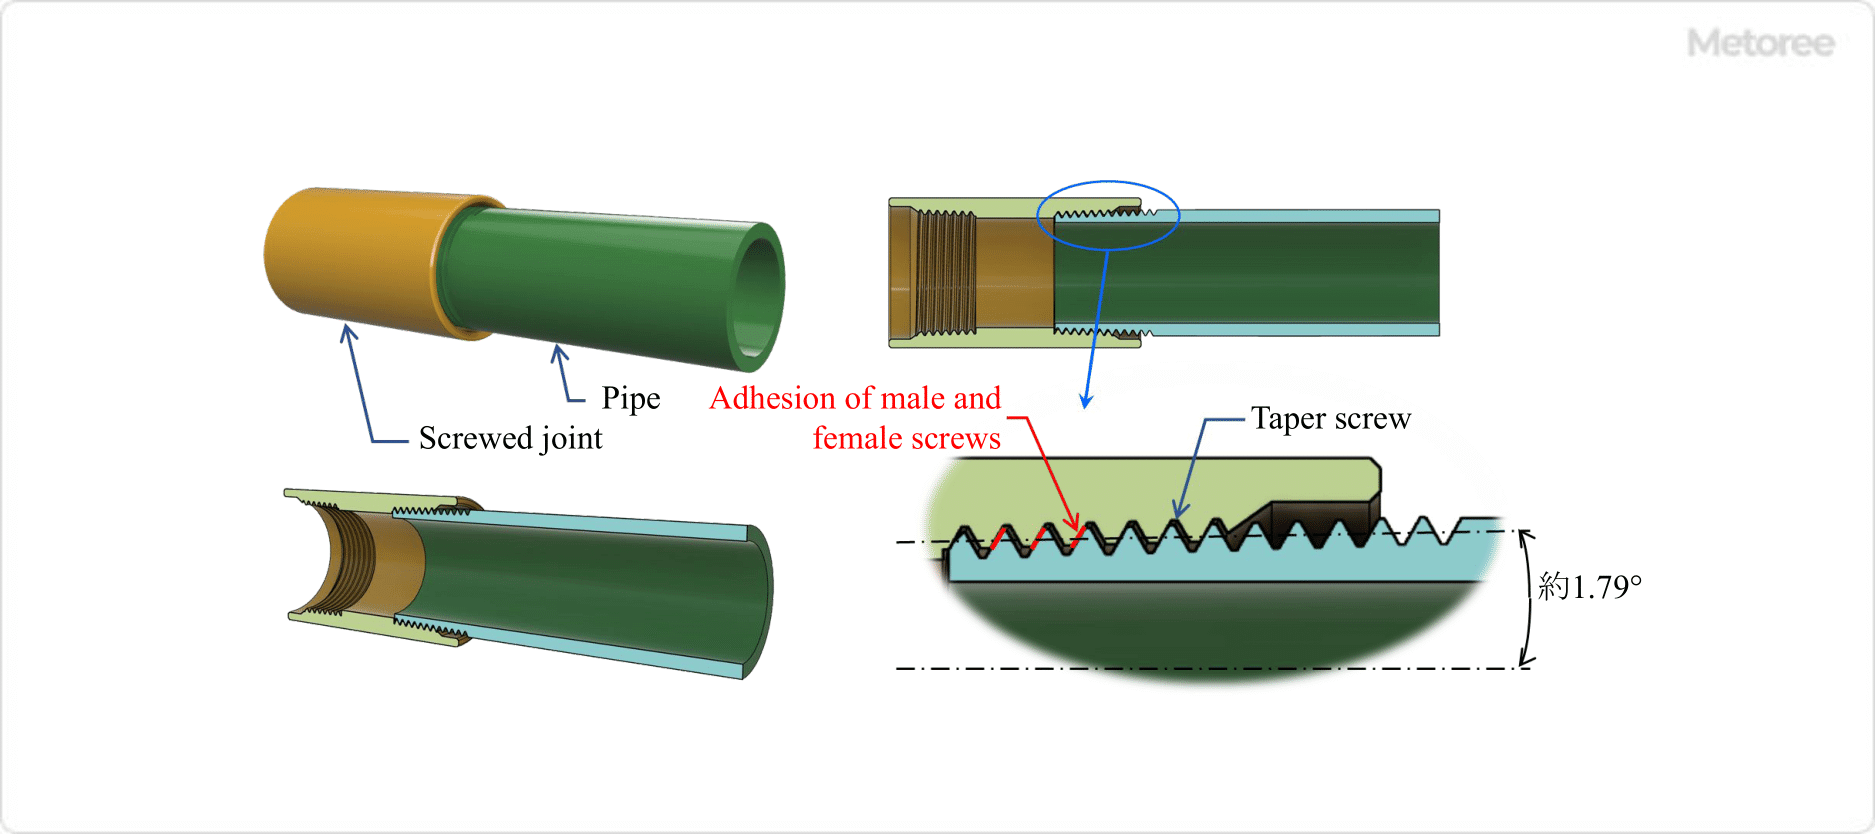 Figure 2. Principle of taper screw